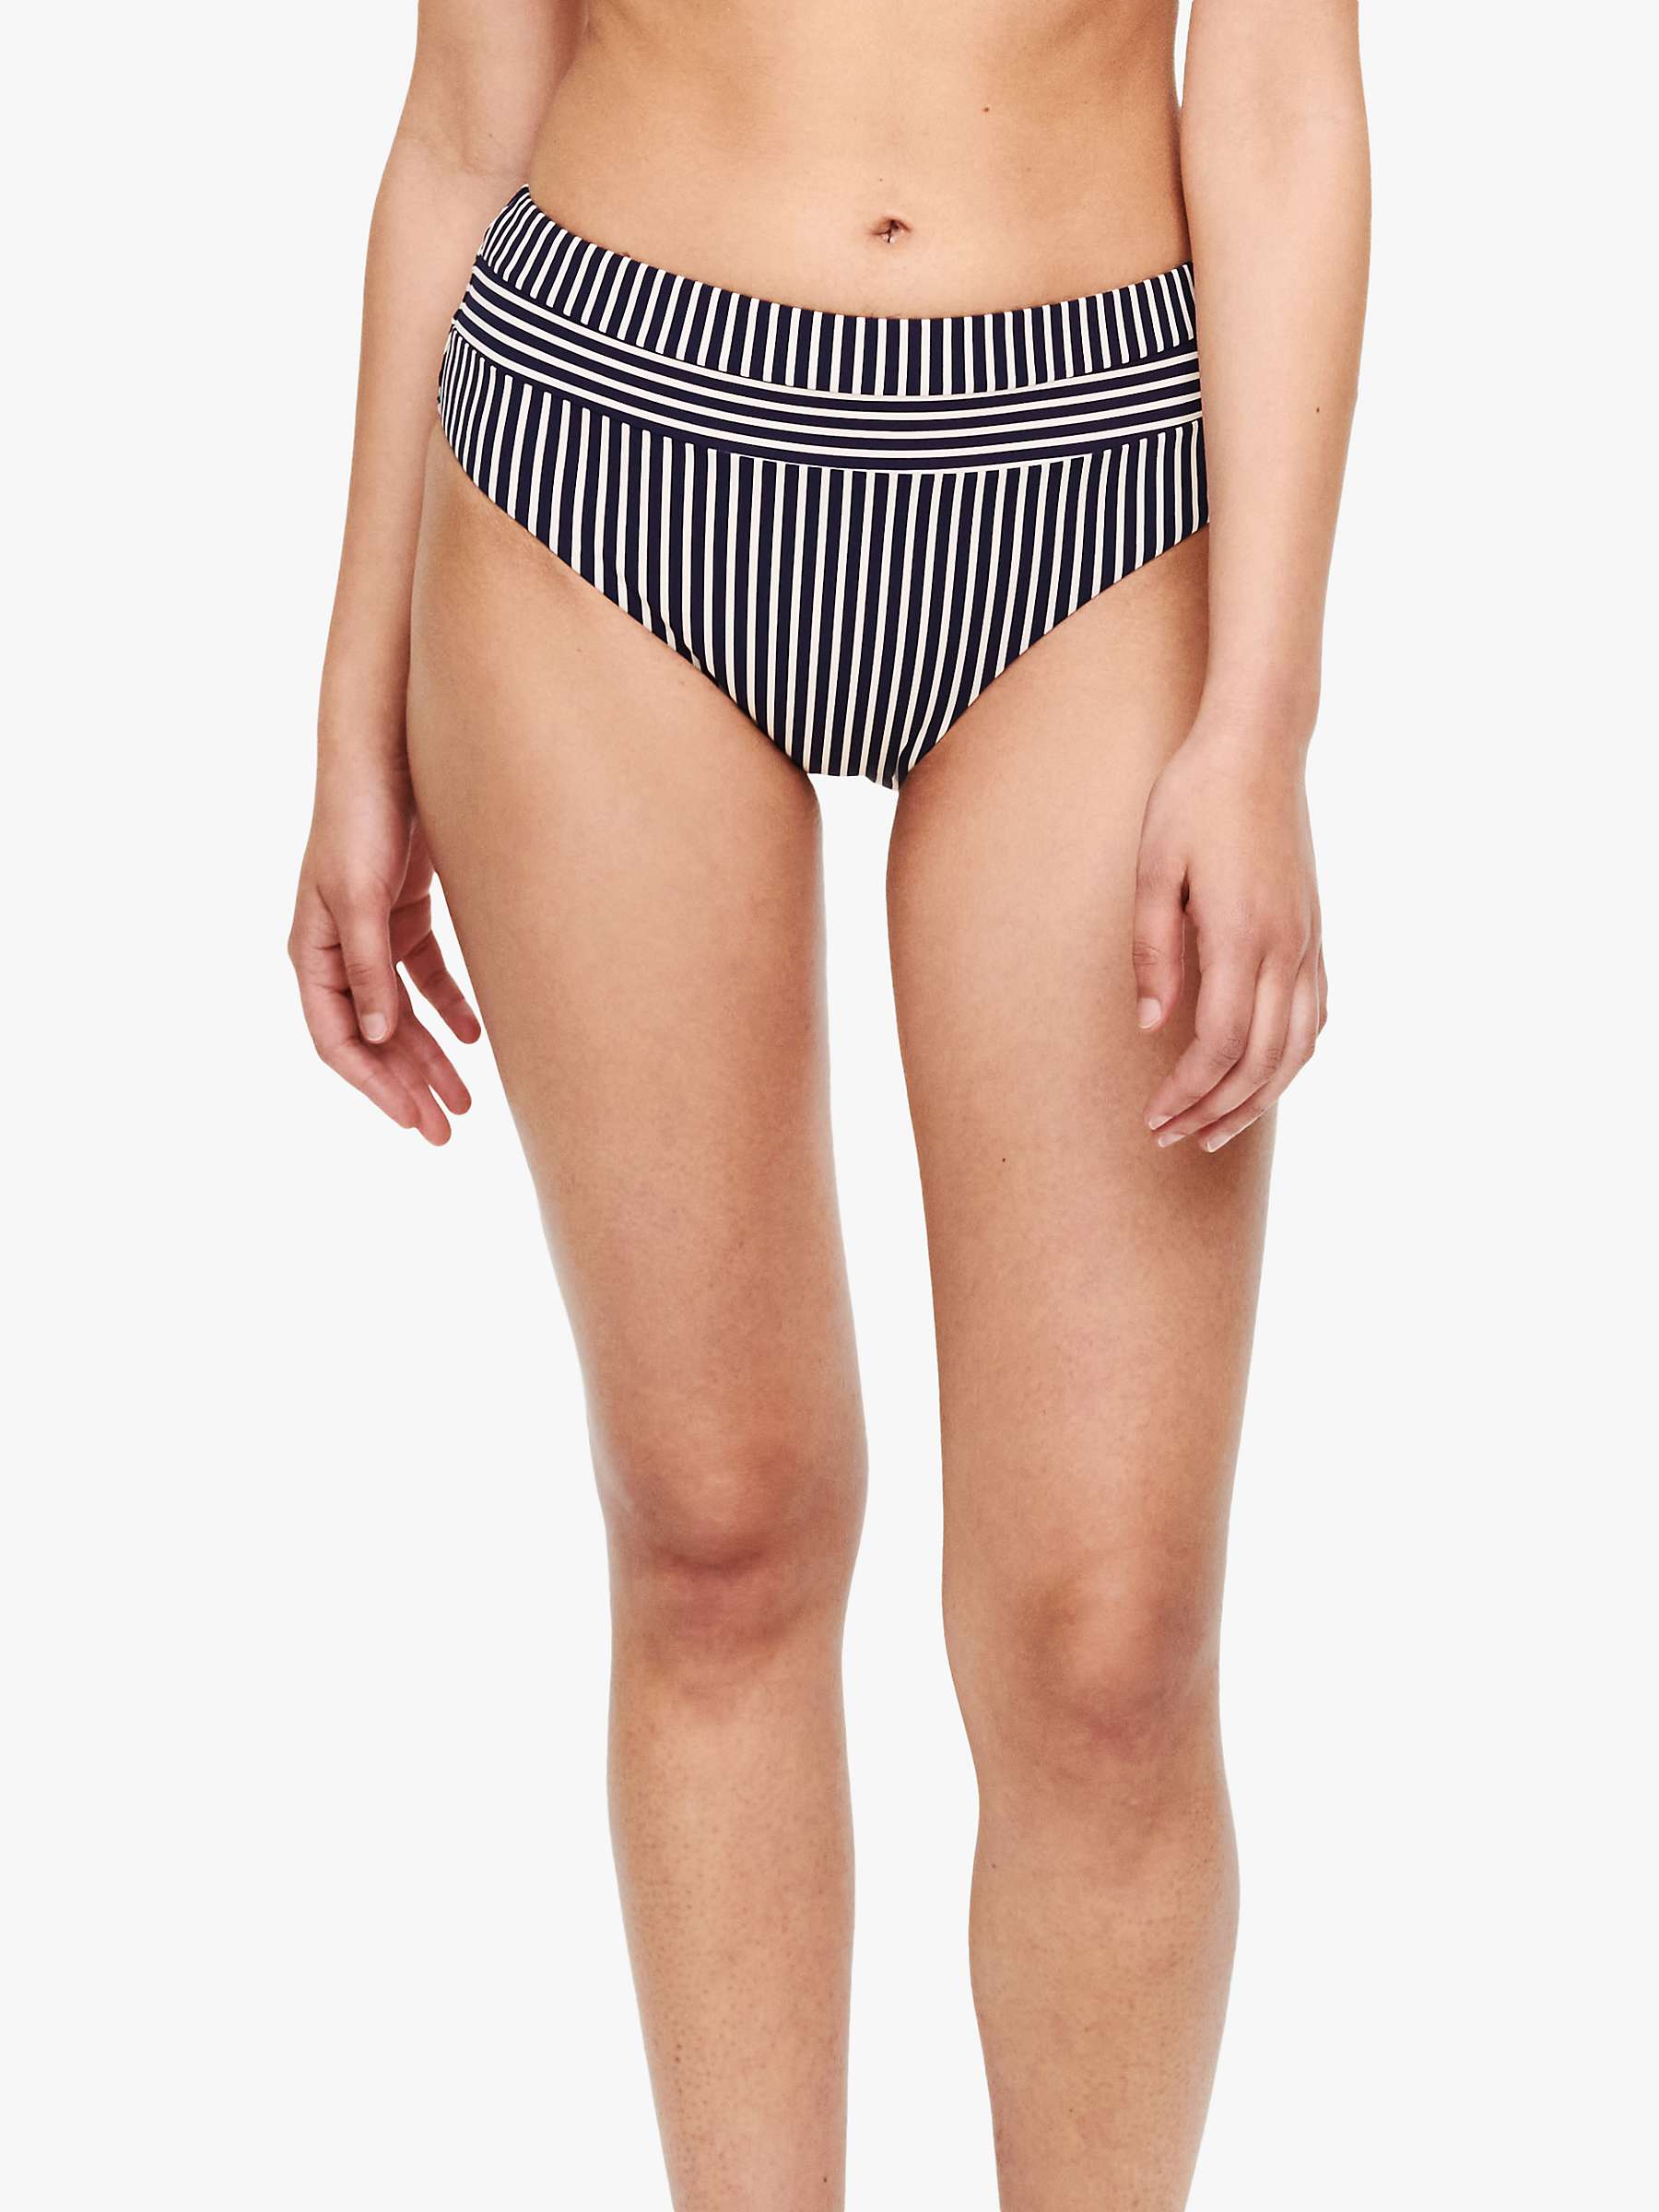 Buy Femilet Murano Bikini Bottoms, Dark Stripes Online at johnlewis.com